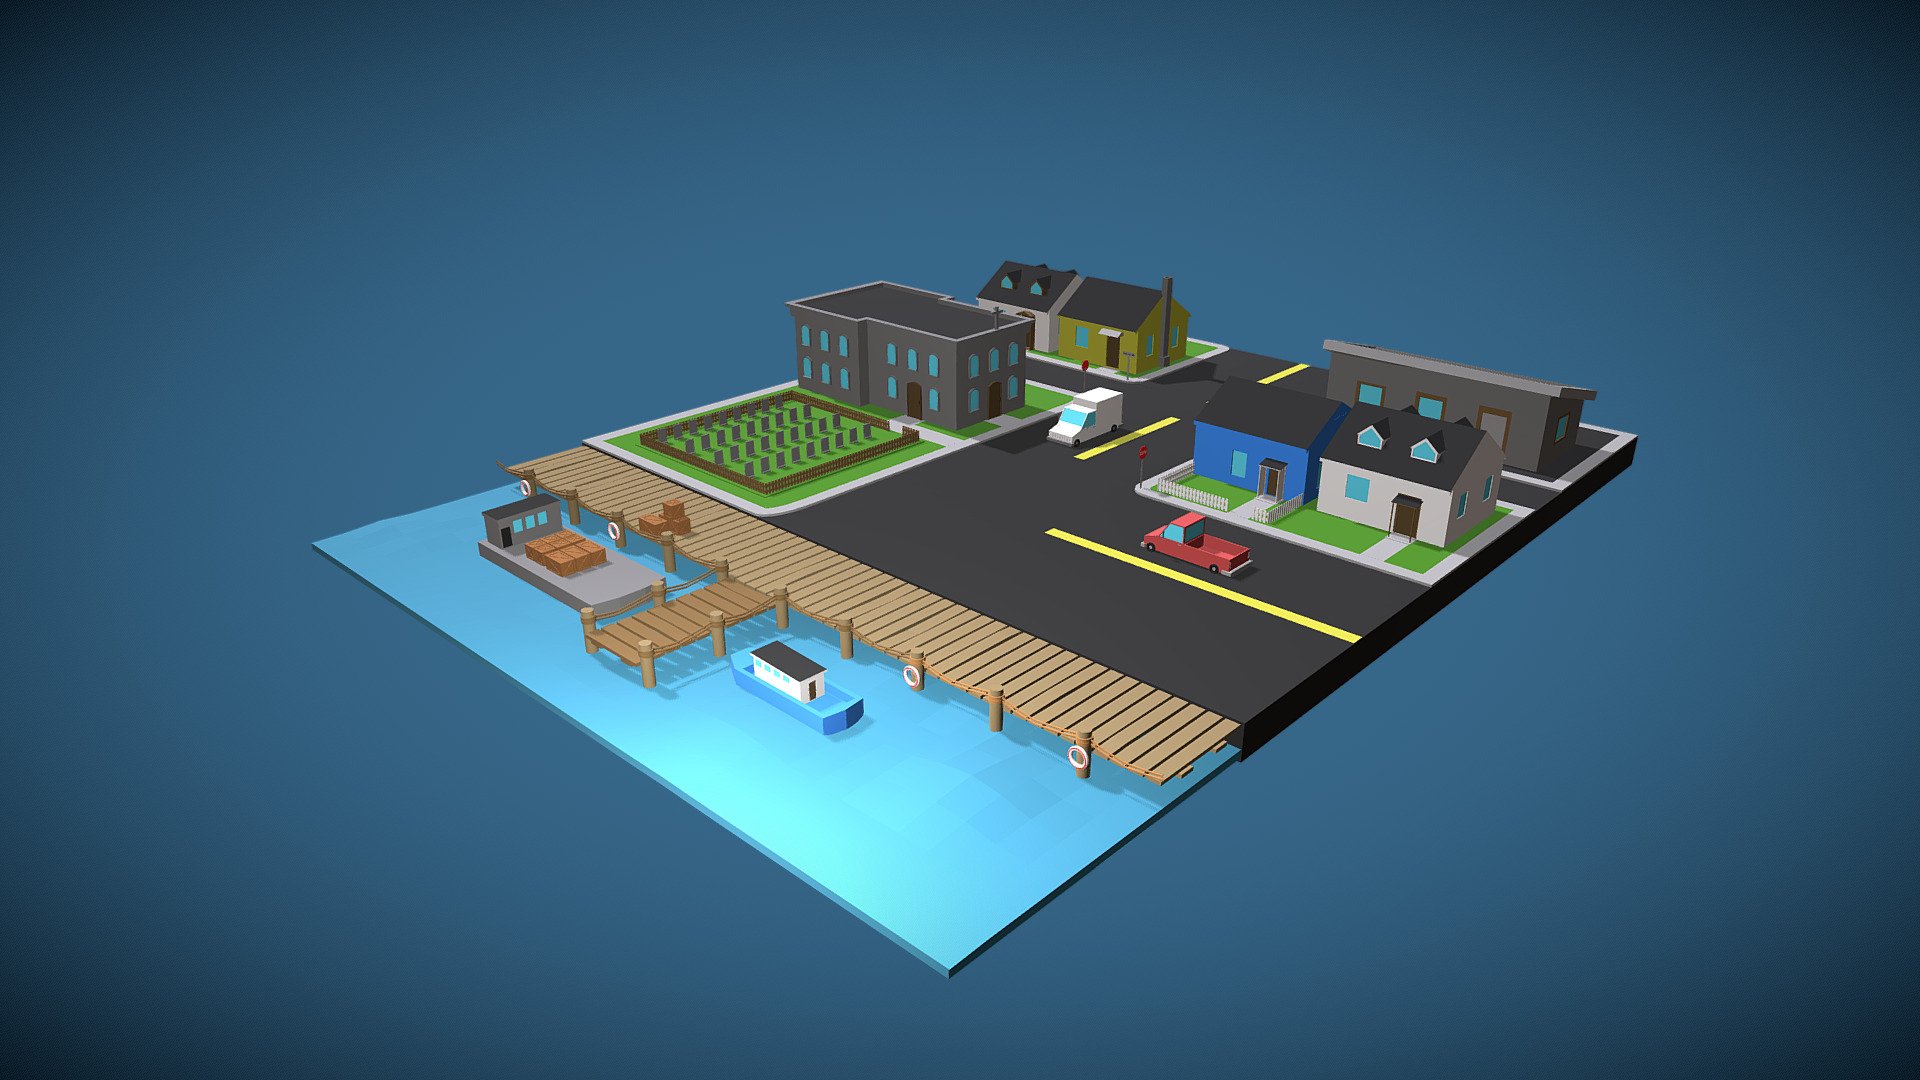 A low-poly port town model/illustration made in Blender 2.8 (Beta) 3d model